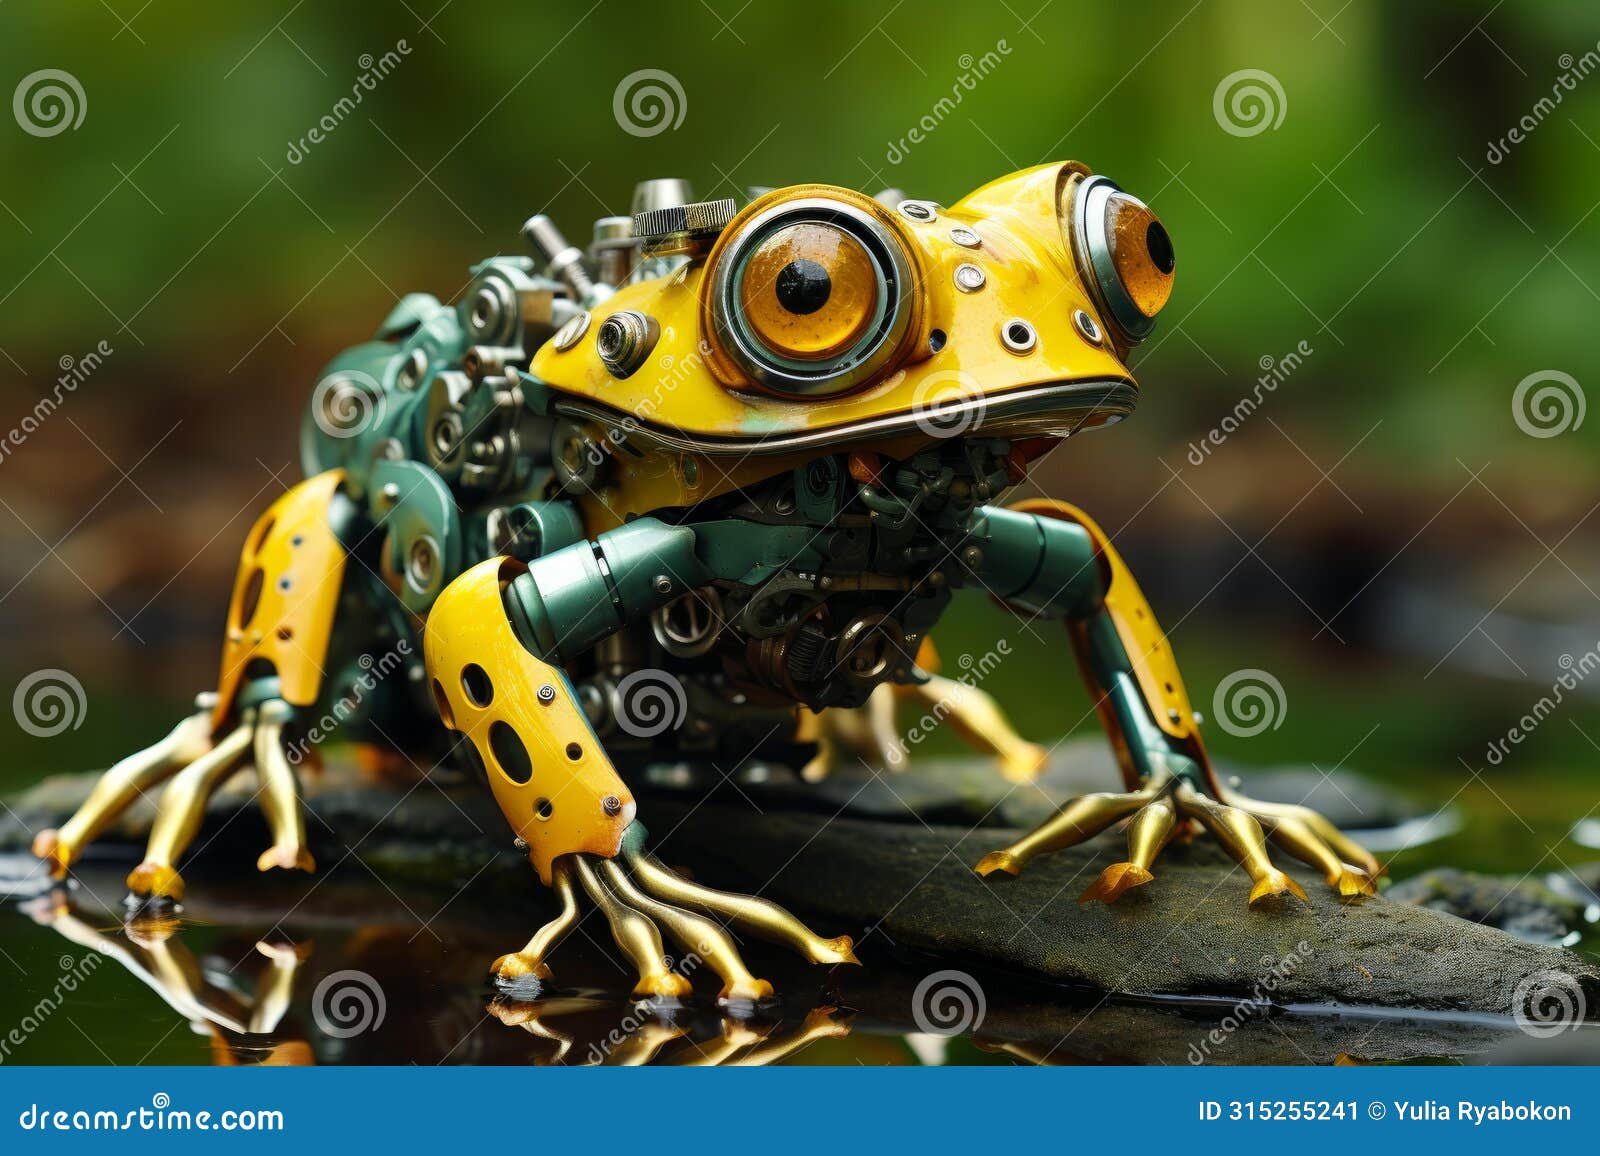 advanced robotized modern frog. generate ai